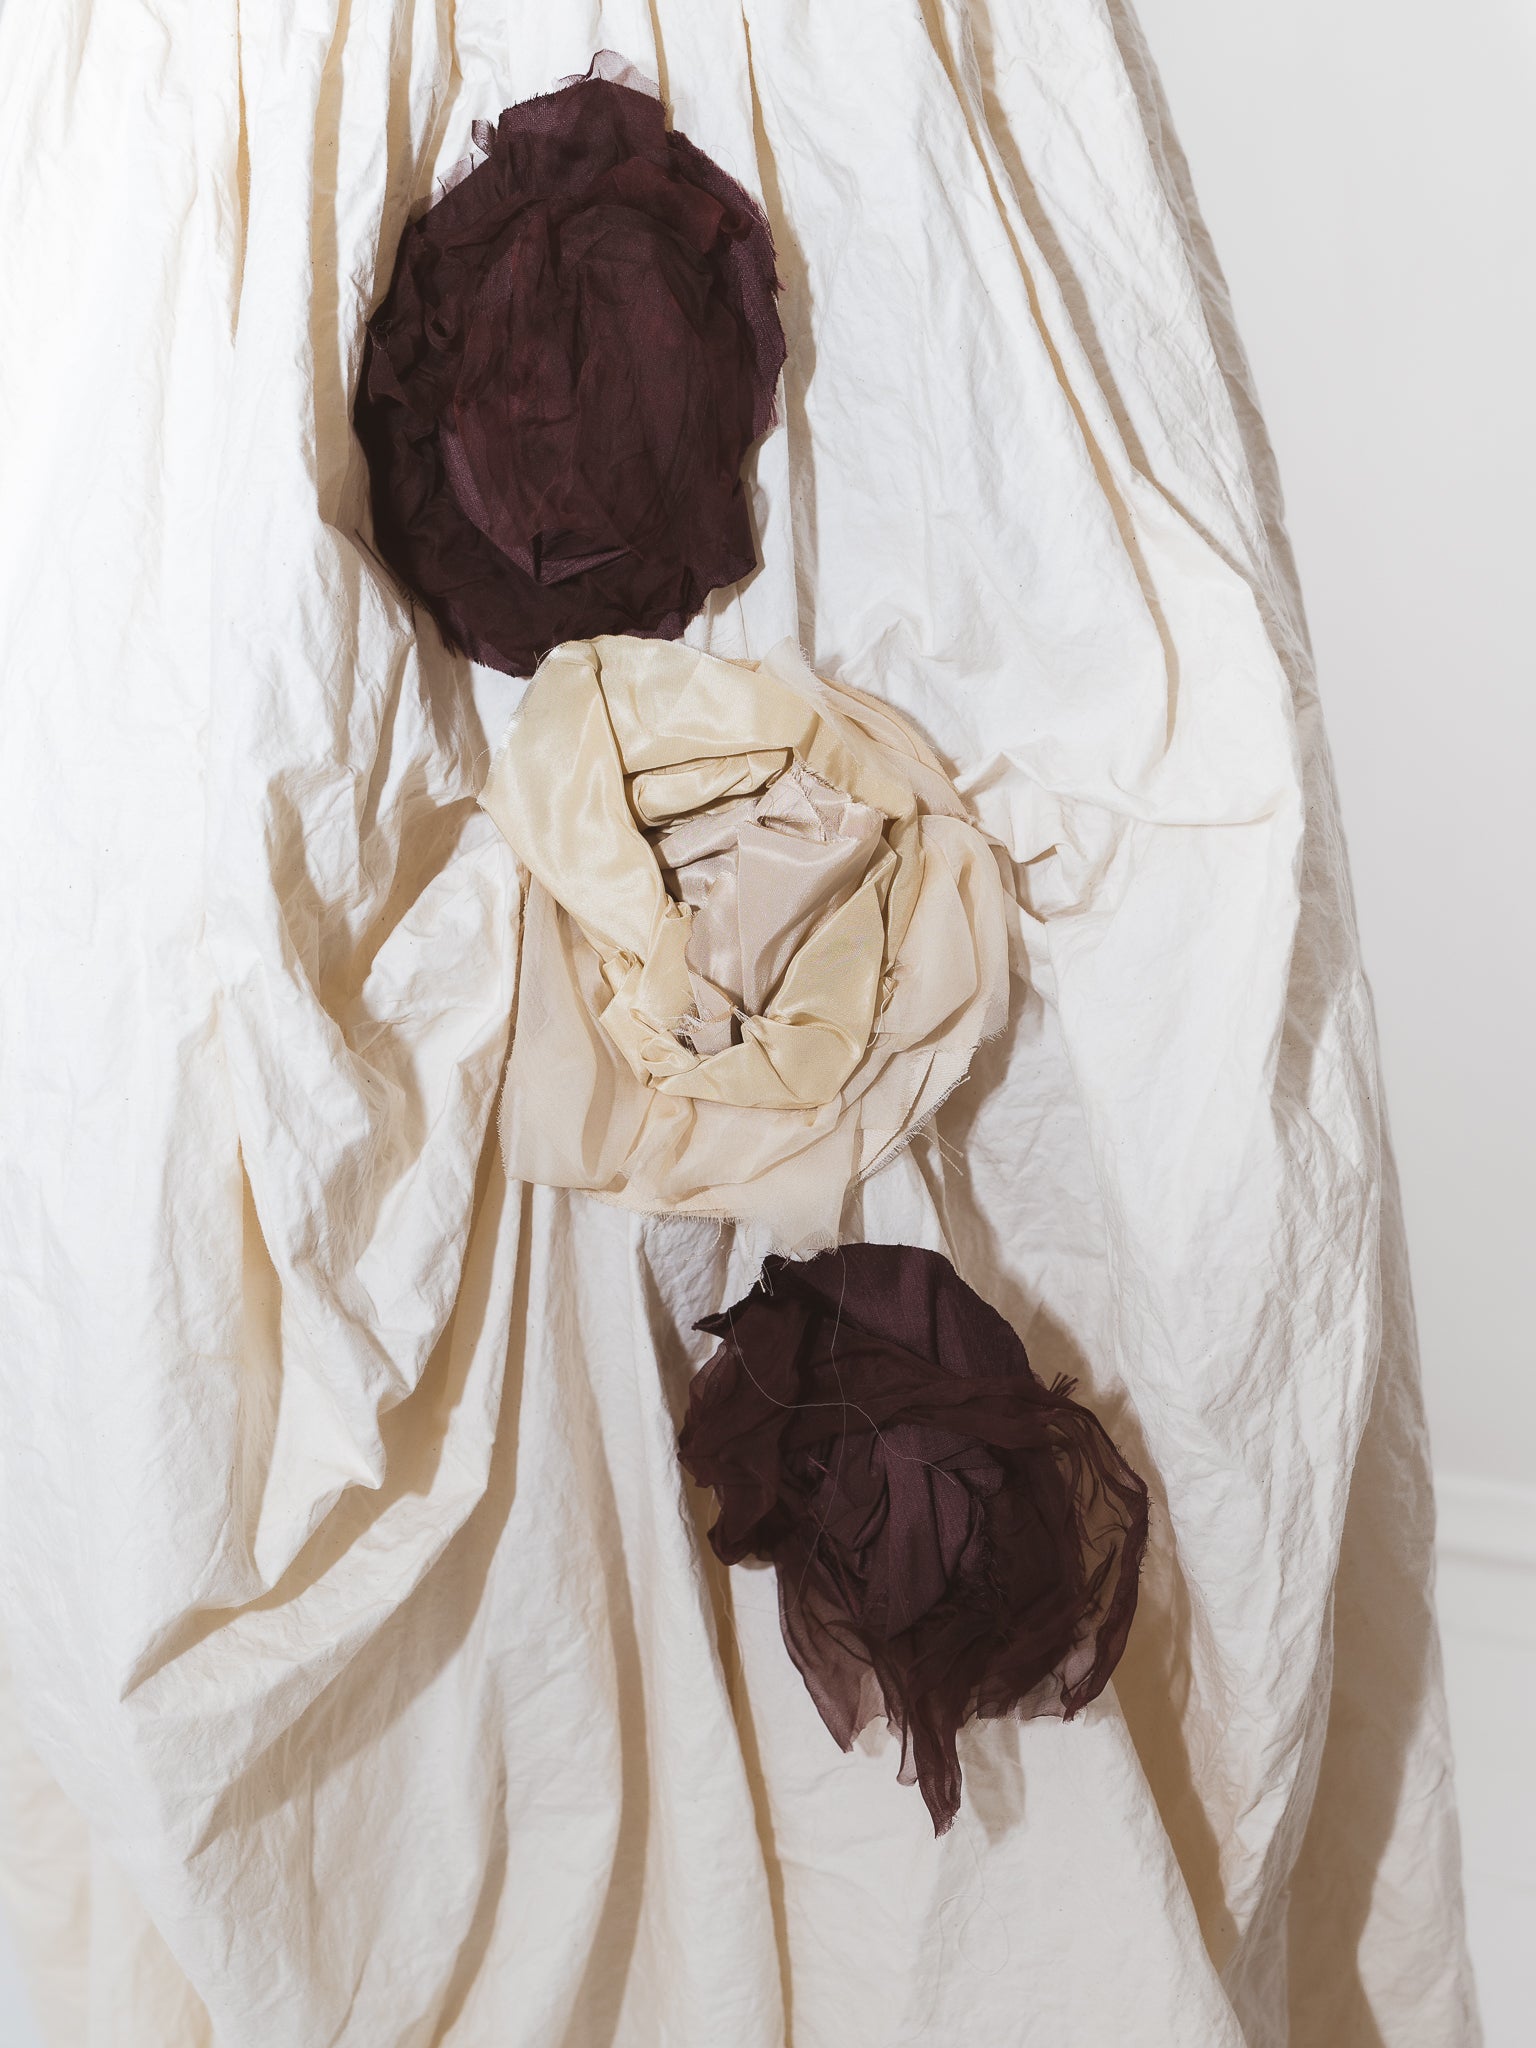 Elena Dawson Bed Dress, Cream Cotton Cambric - Worthwhile